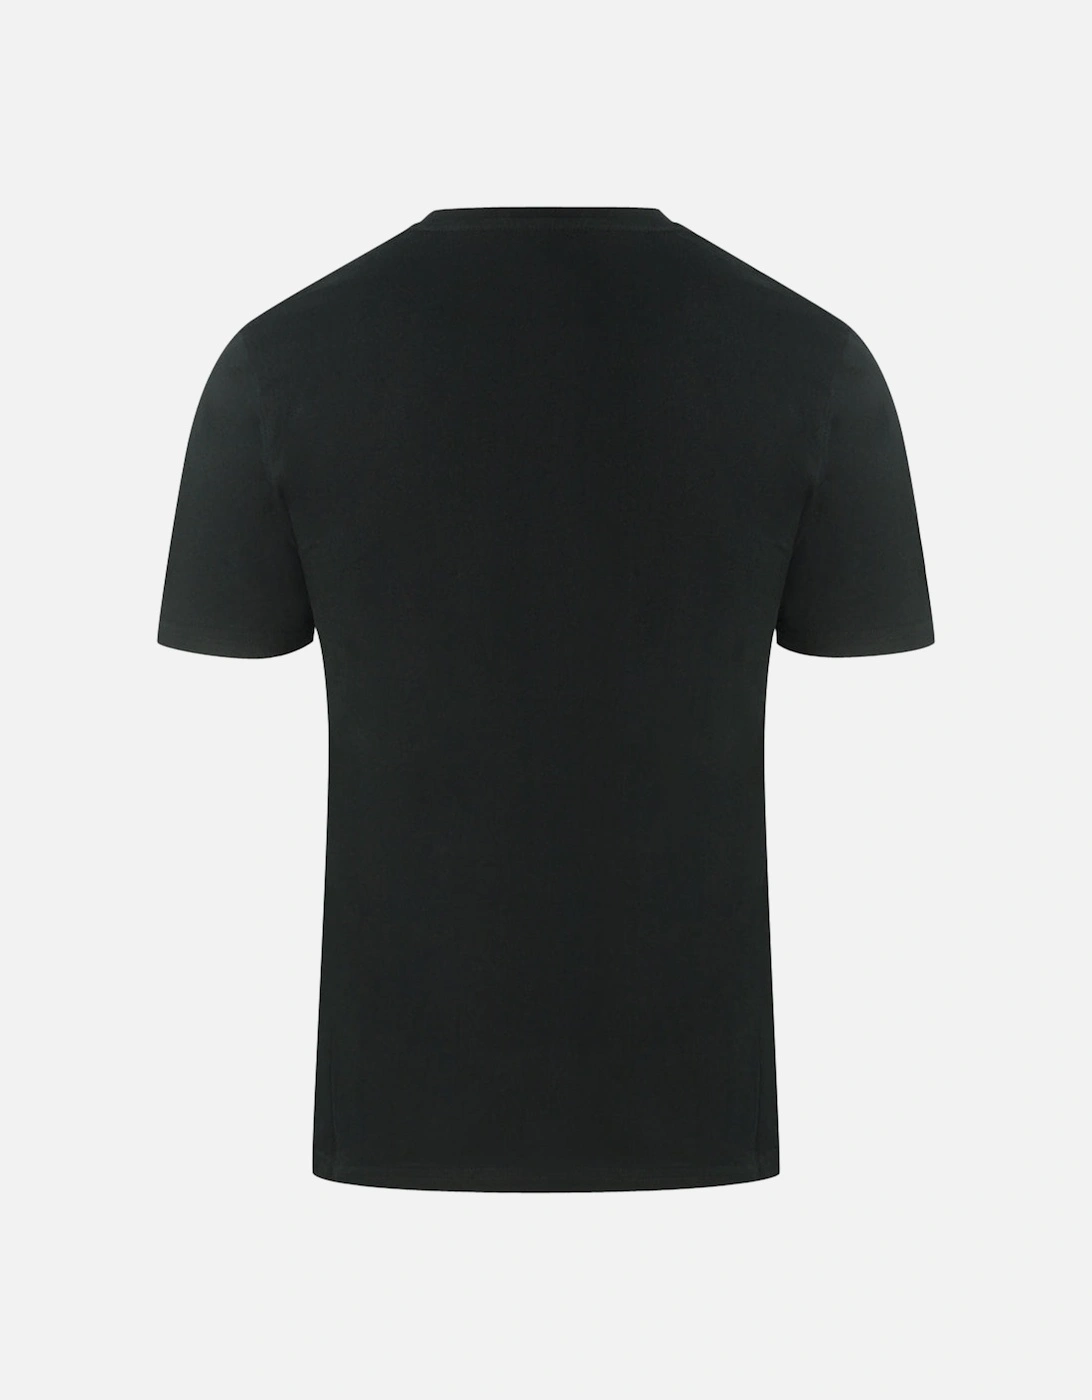 Sea Logo Black T-Shirt